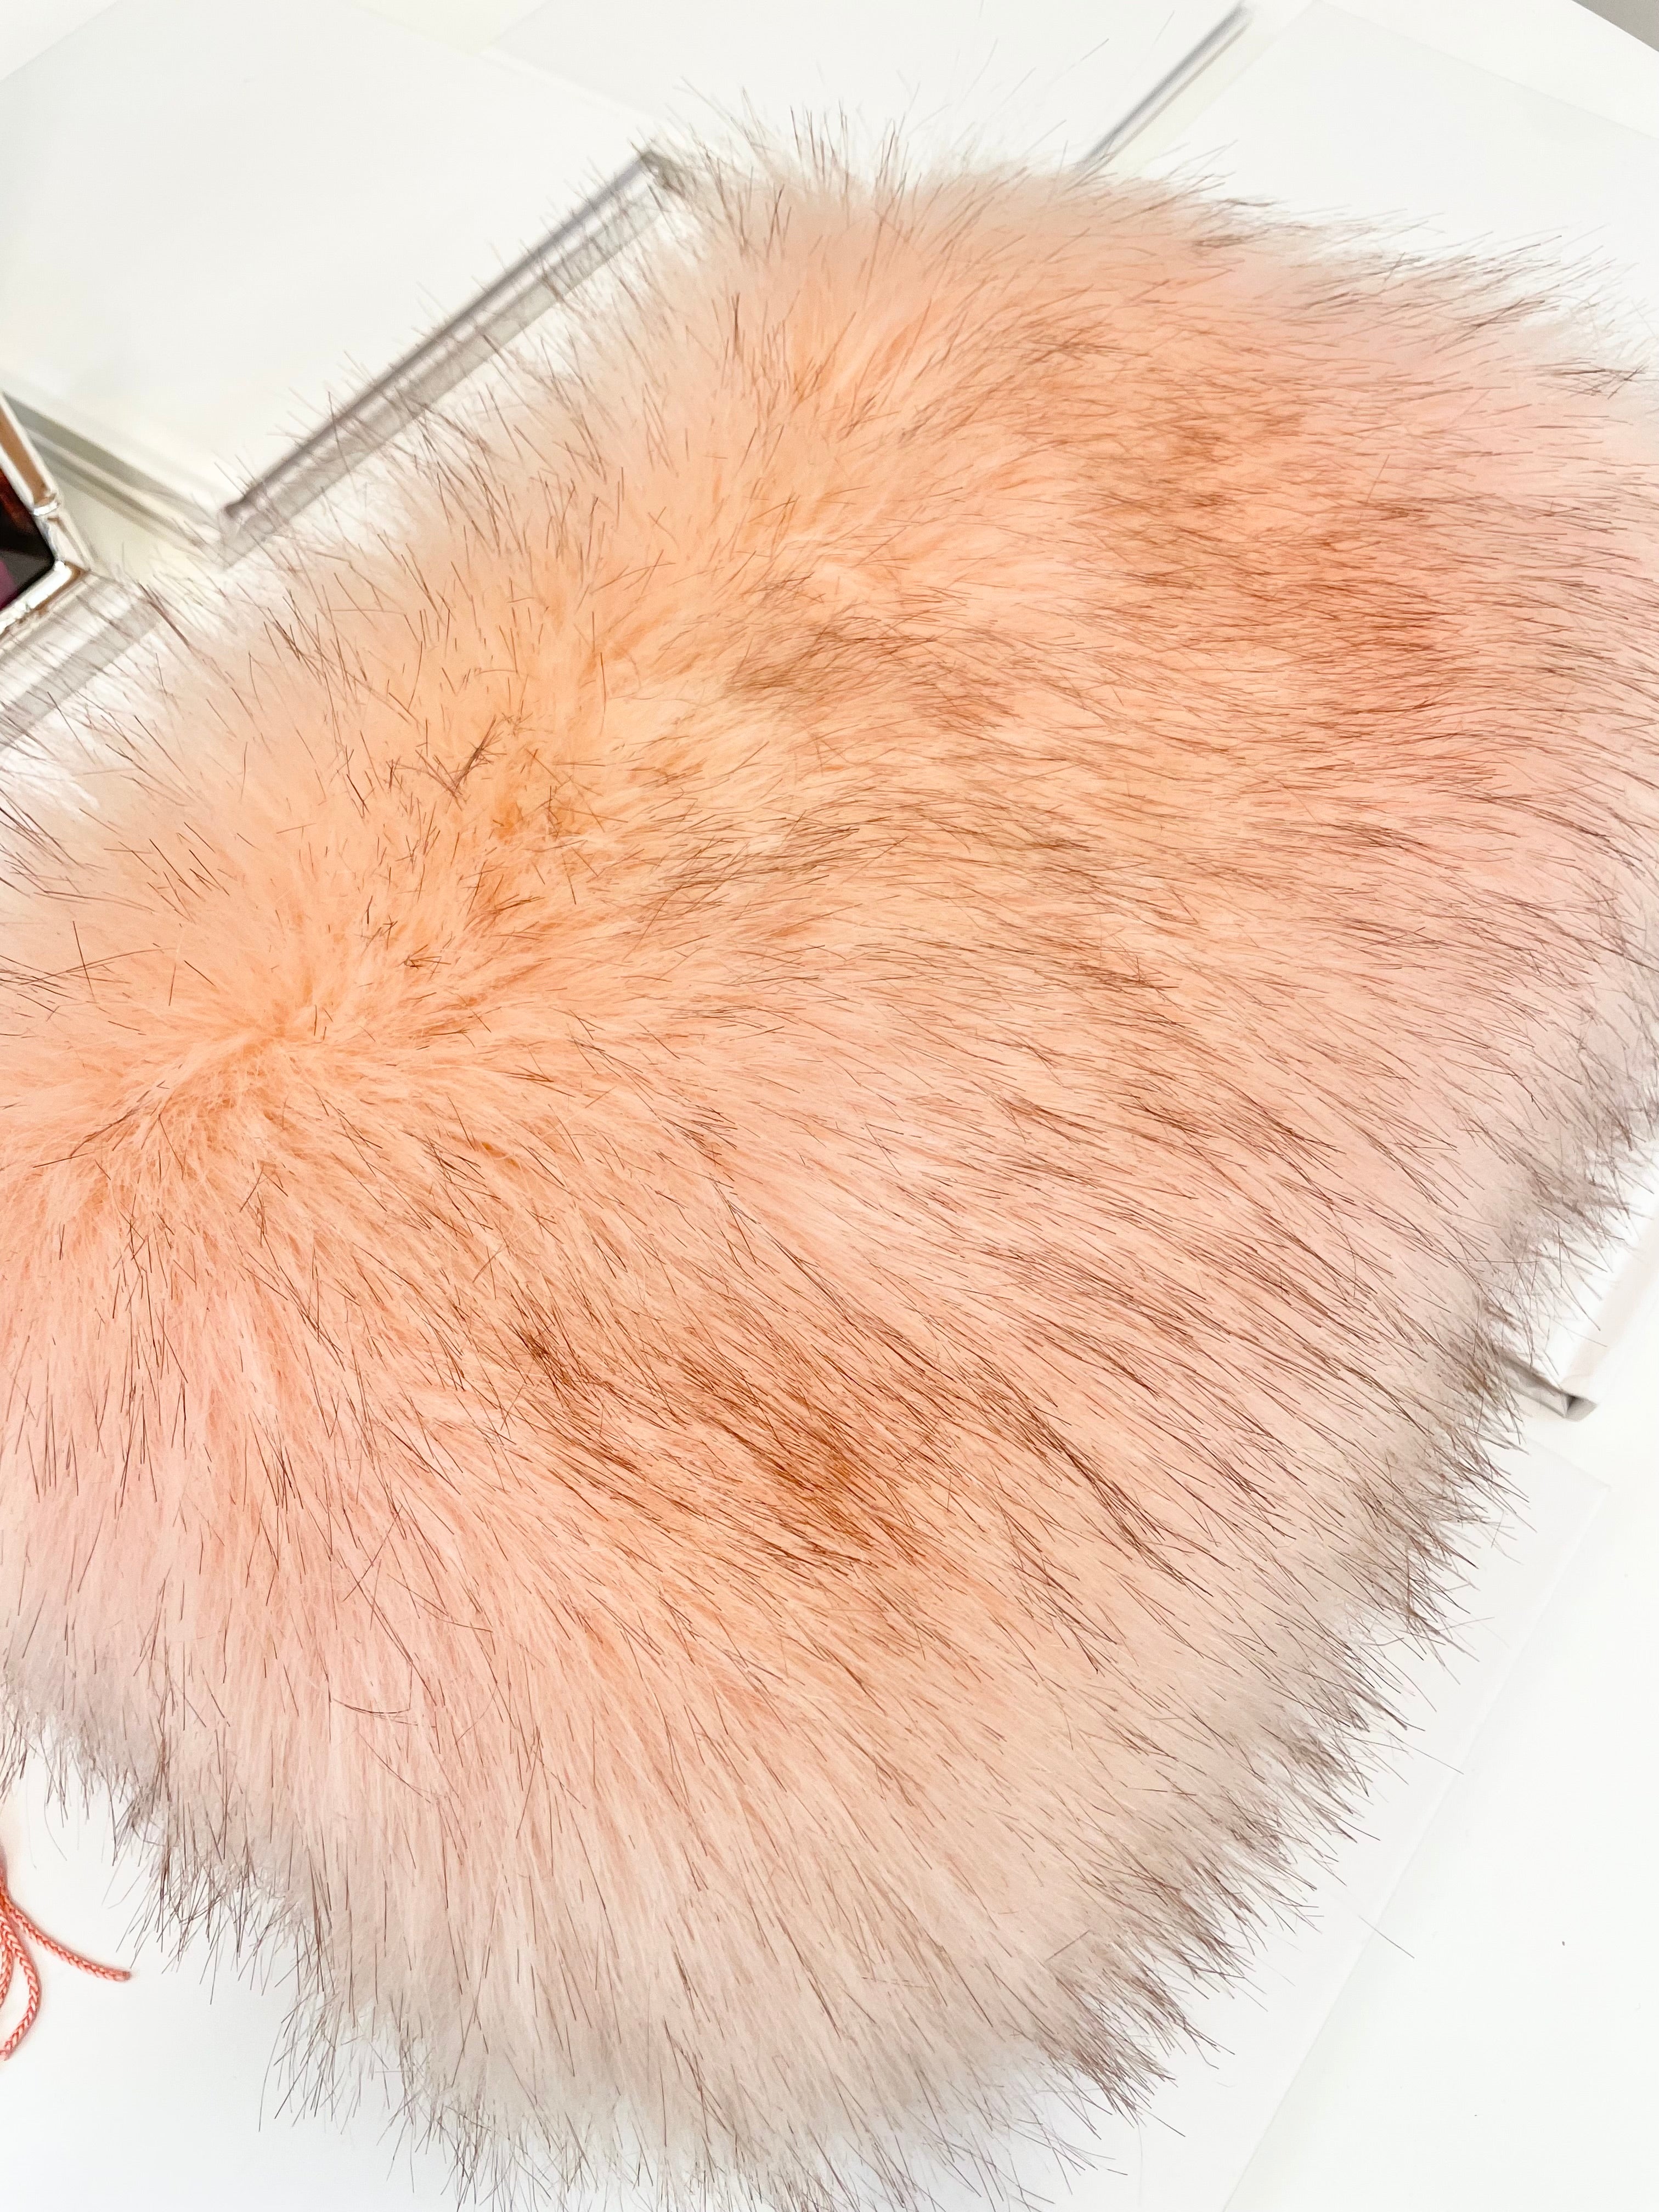 The most lovely blush faux fur clutch bag! So feminine...